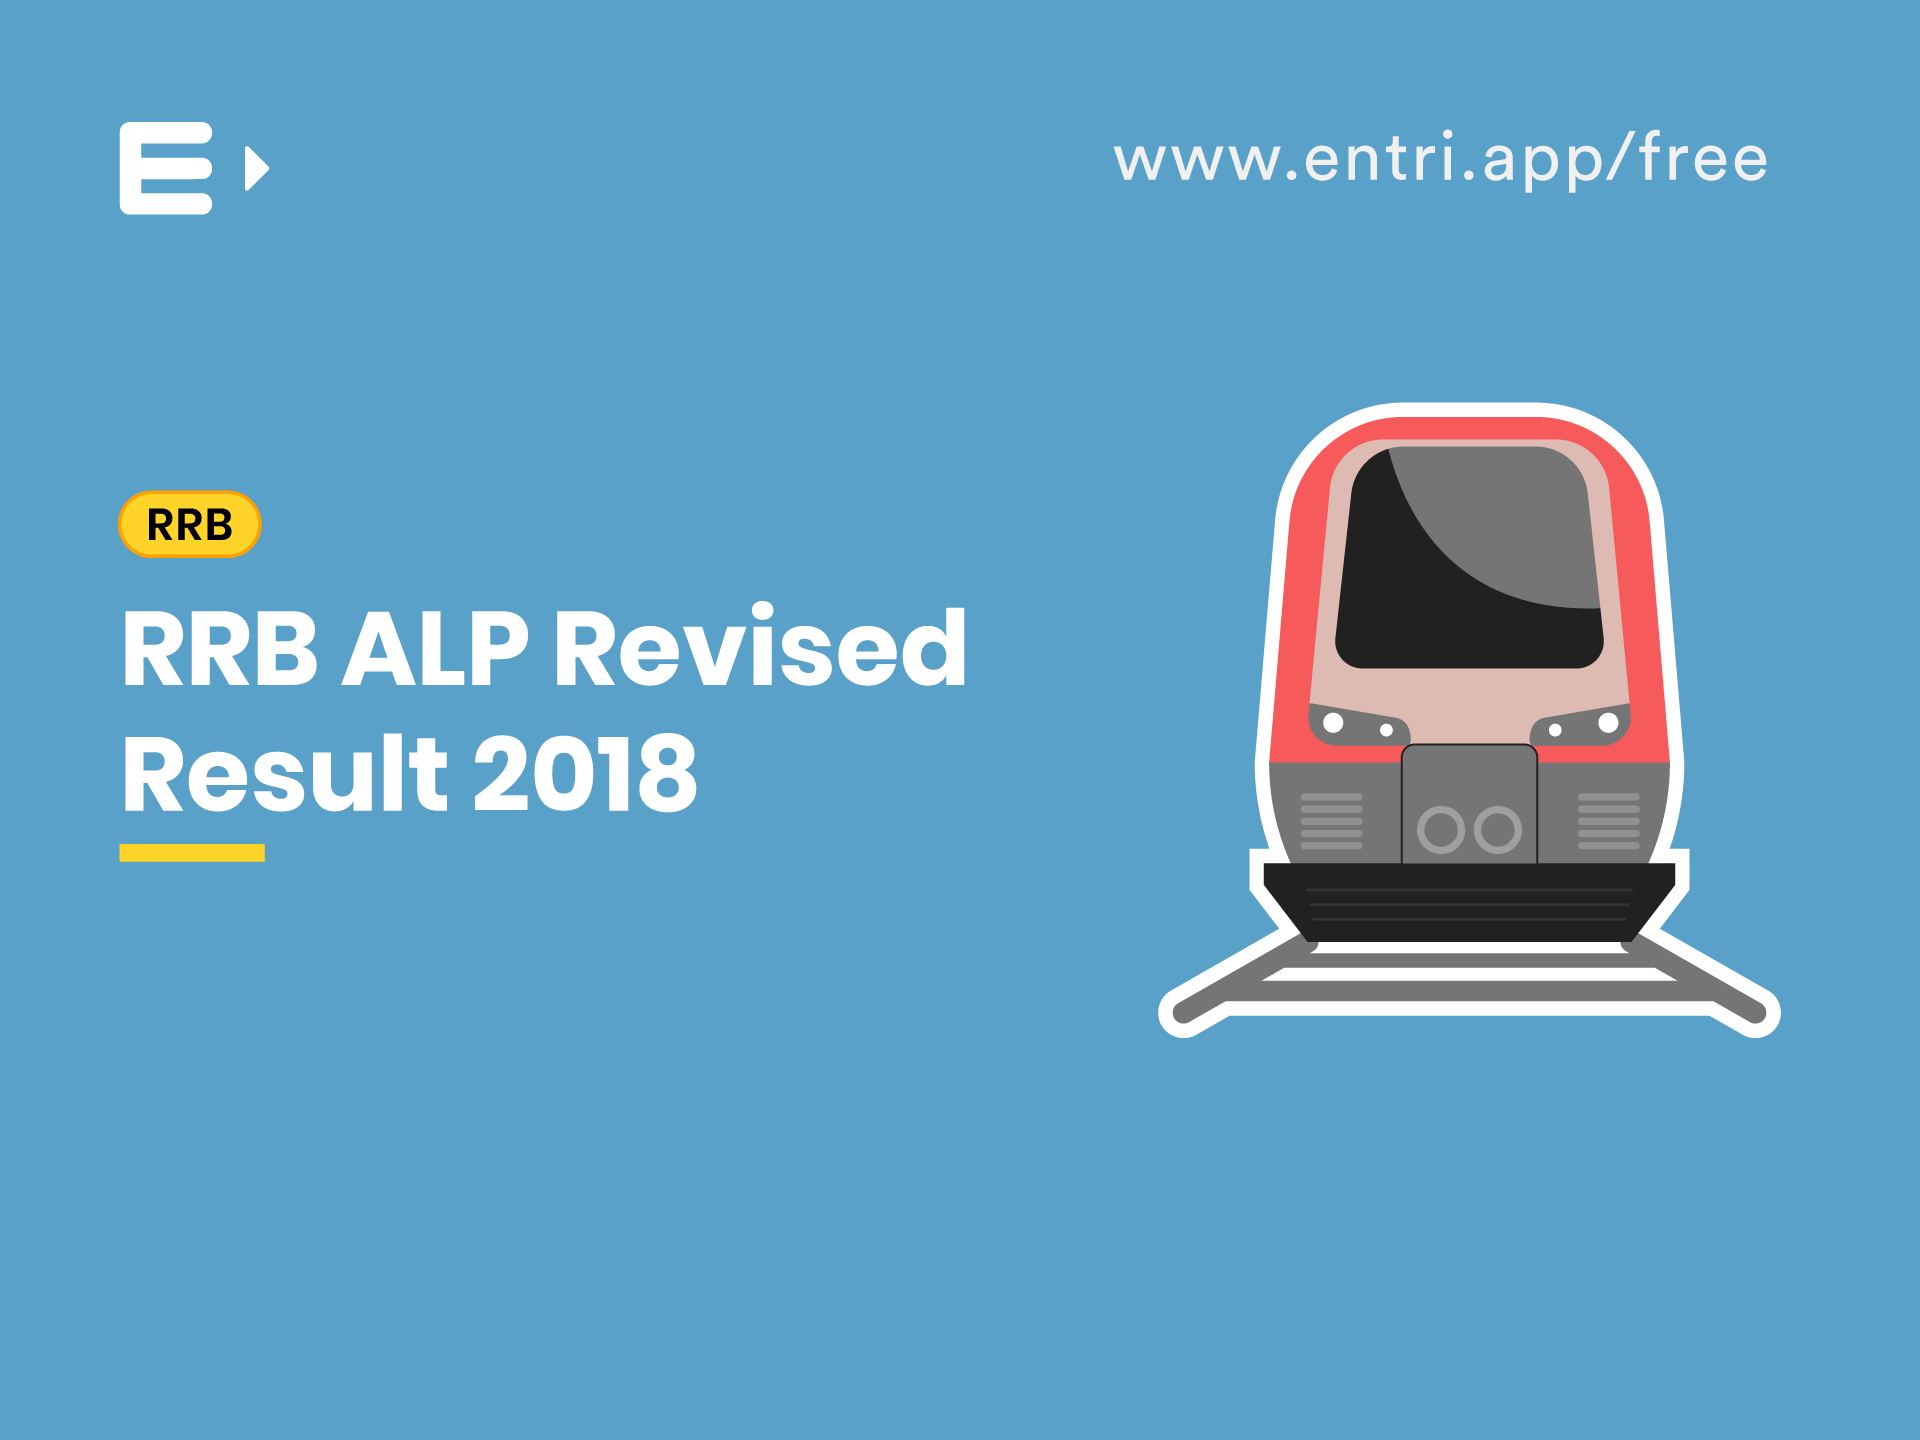 rrb-alp-revised-result-2018-declared-latest-updates